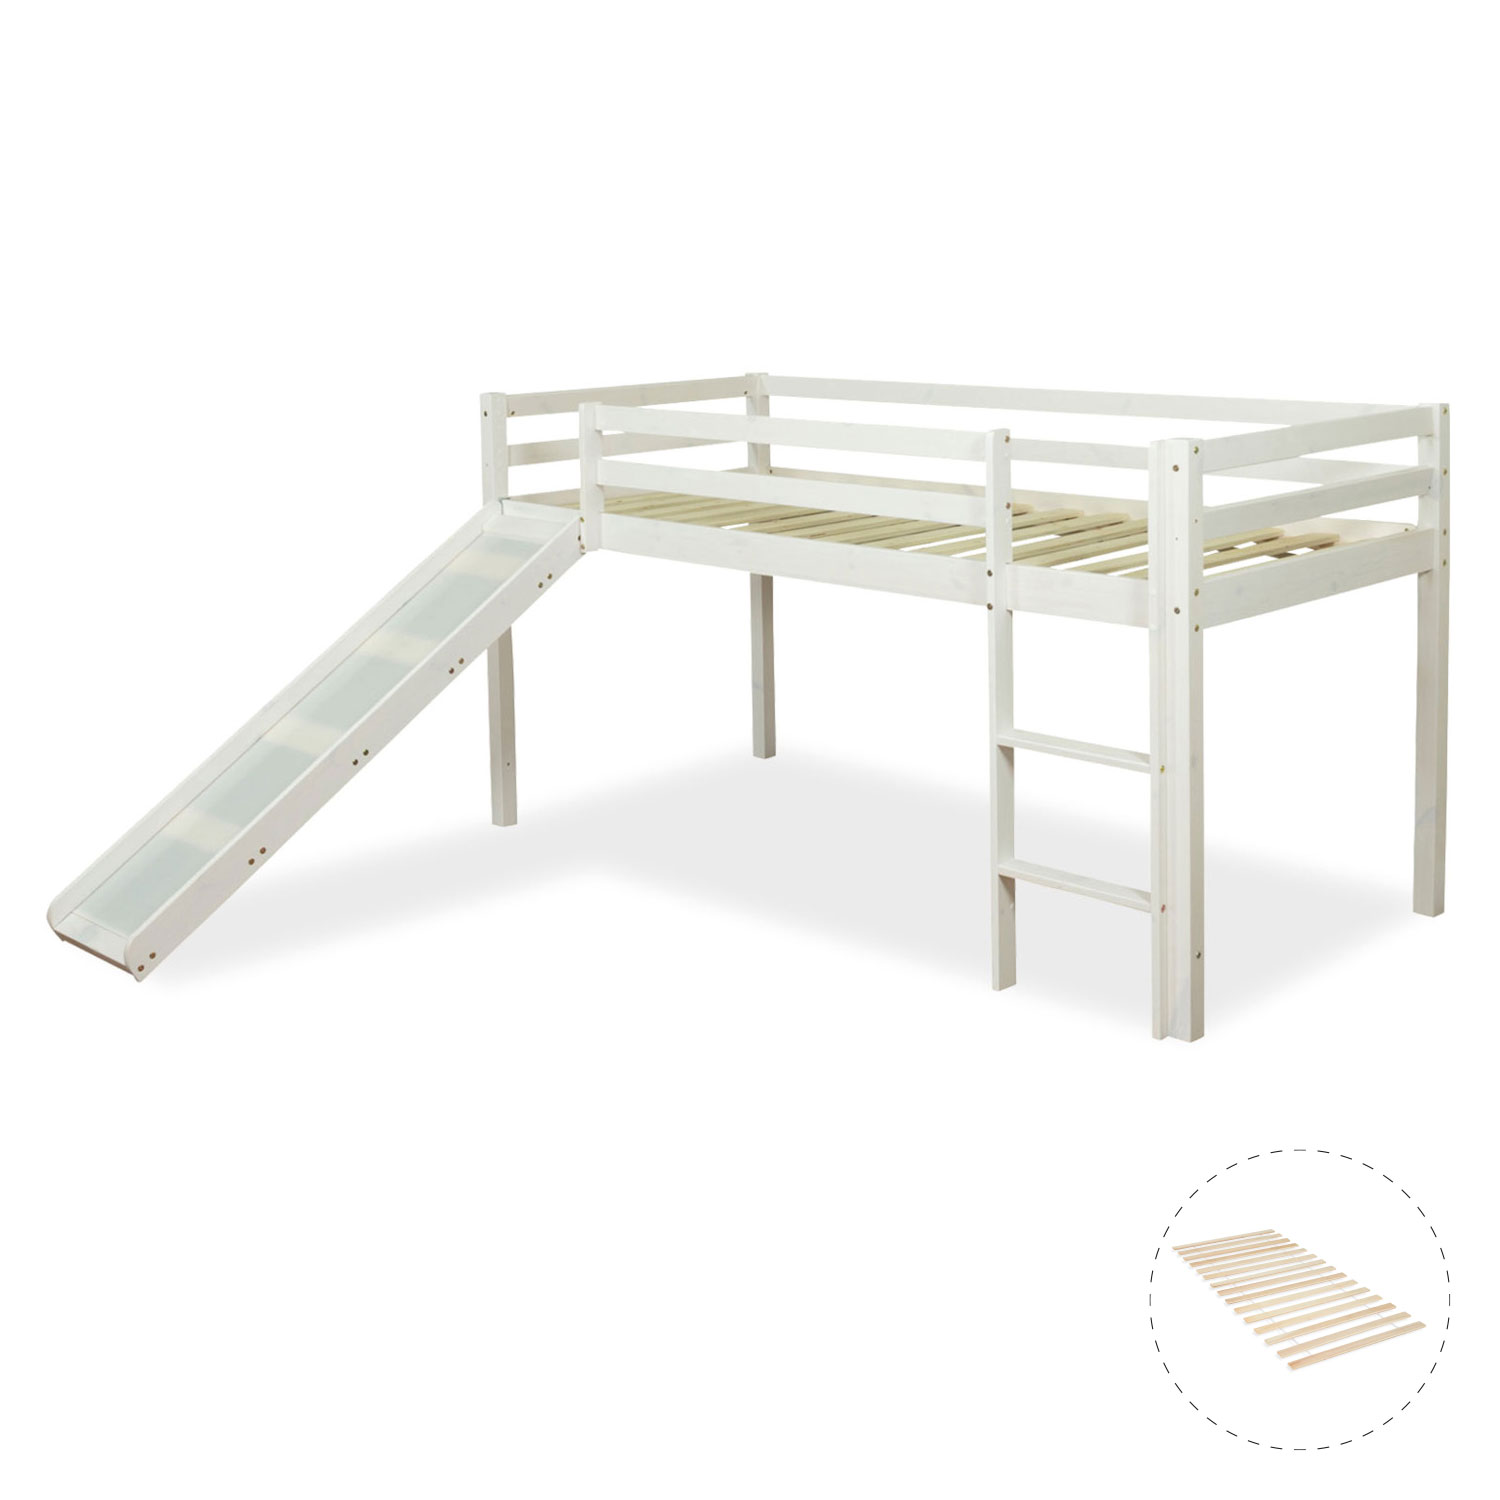 Children's Loft Bed 90x200 cm with Slatted Frame Slide Ladder, Bunk Bed Play Bed White Wood Pine